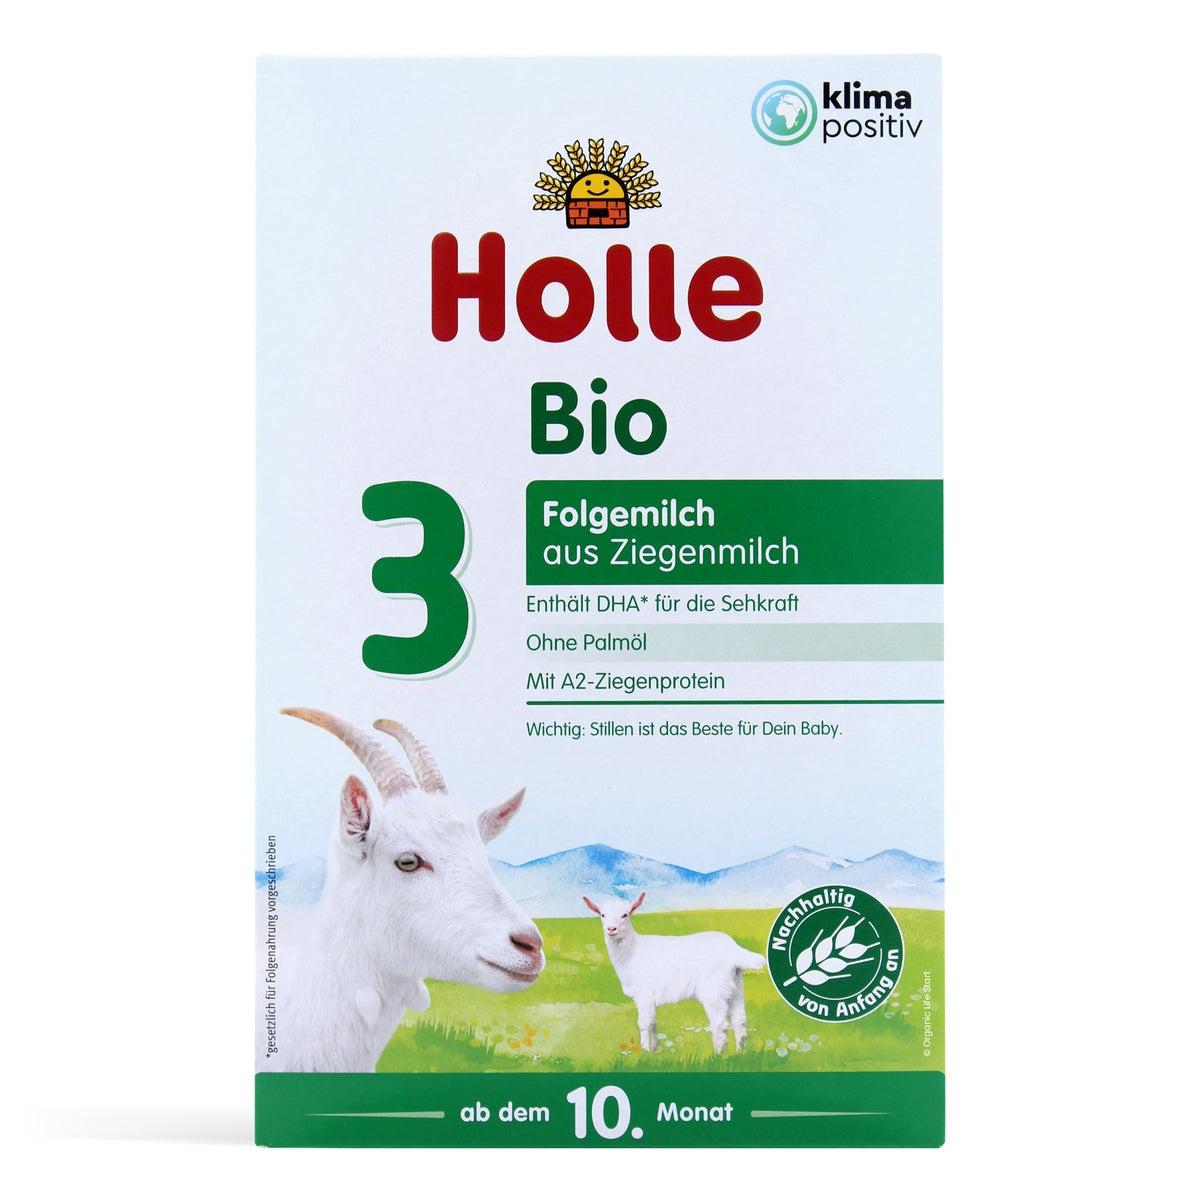 Holle Bio Goat Stage 3 - Organic European Baby Formula